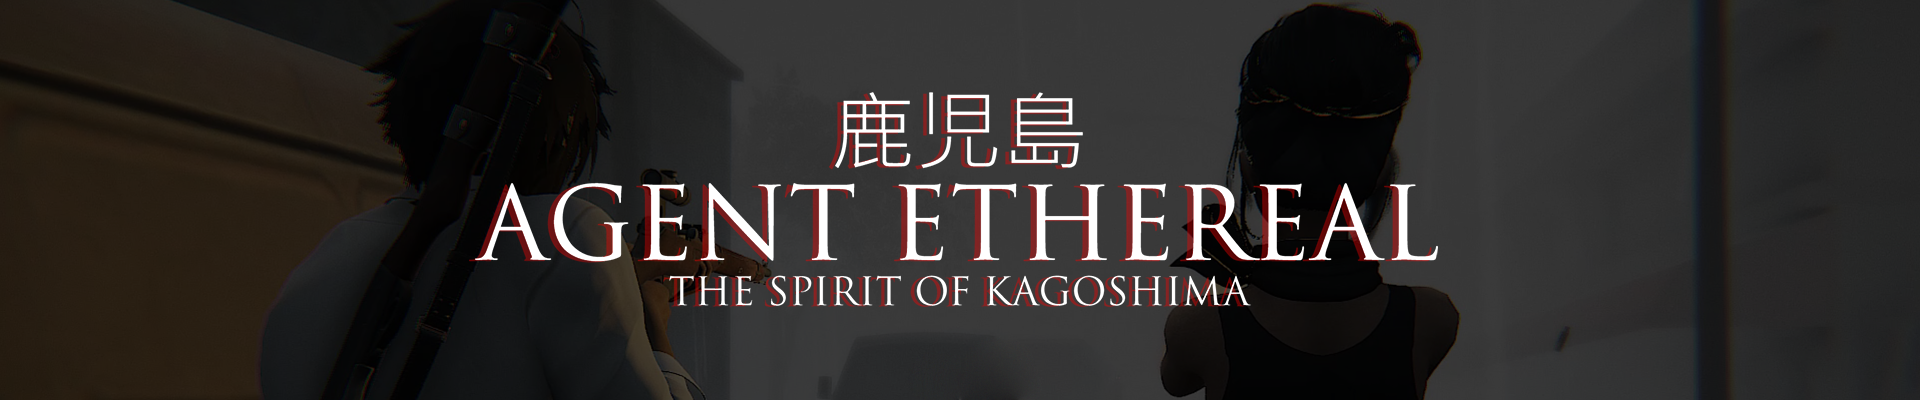 Agent Ethereal - The Spirit of Kagoshima